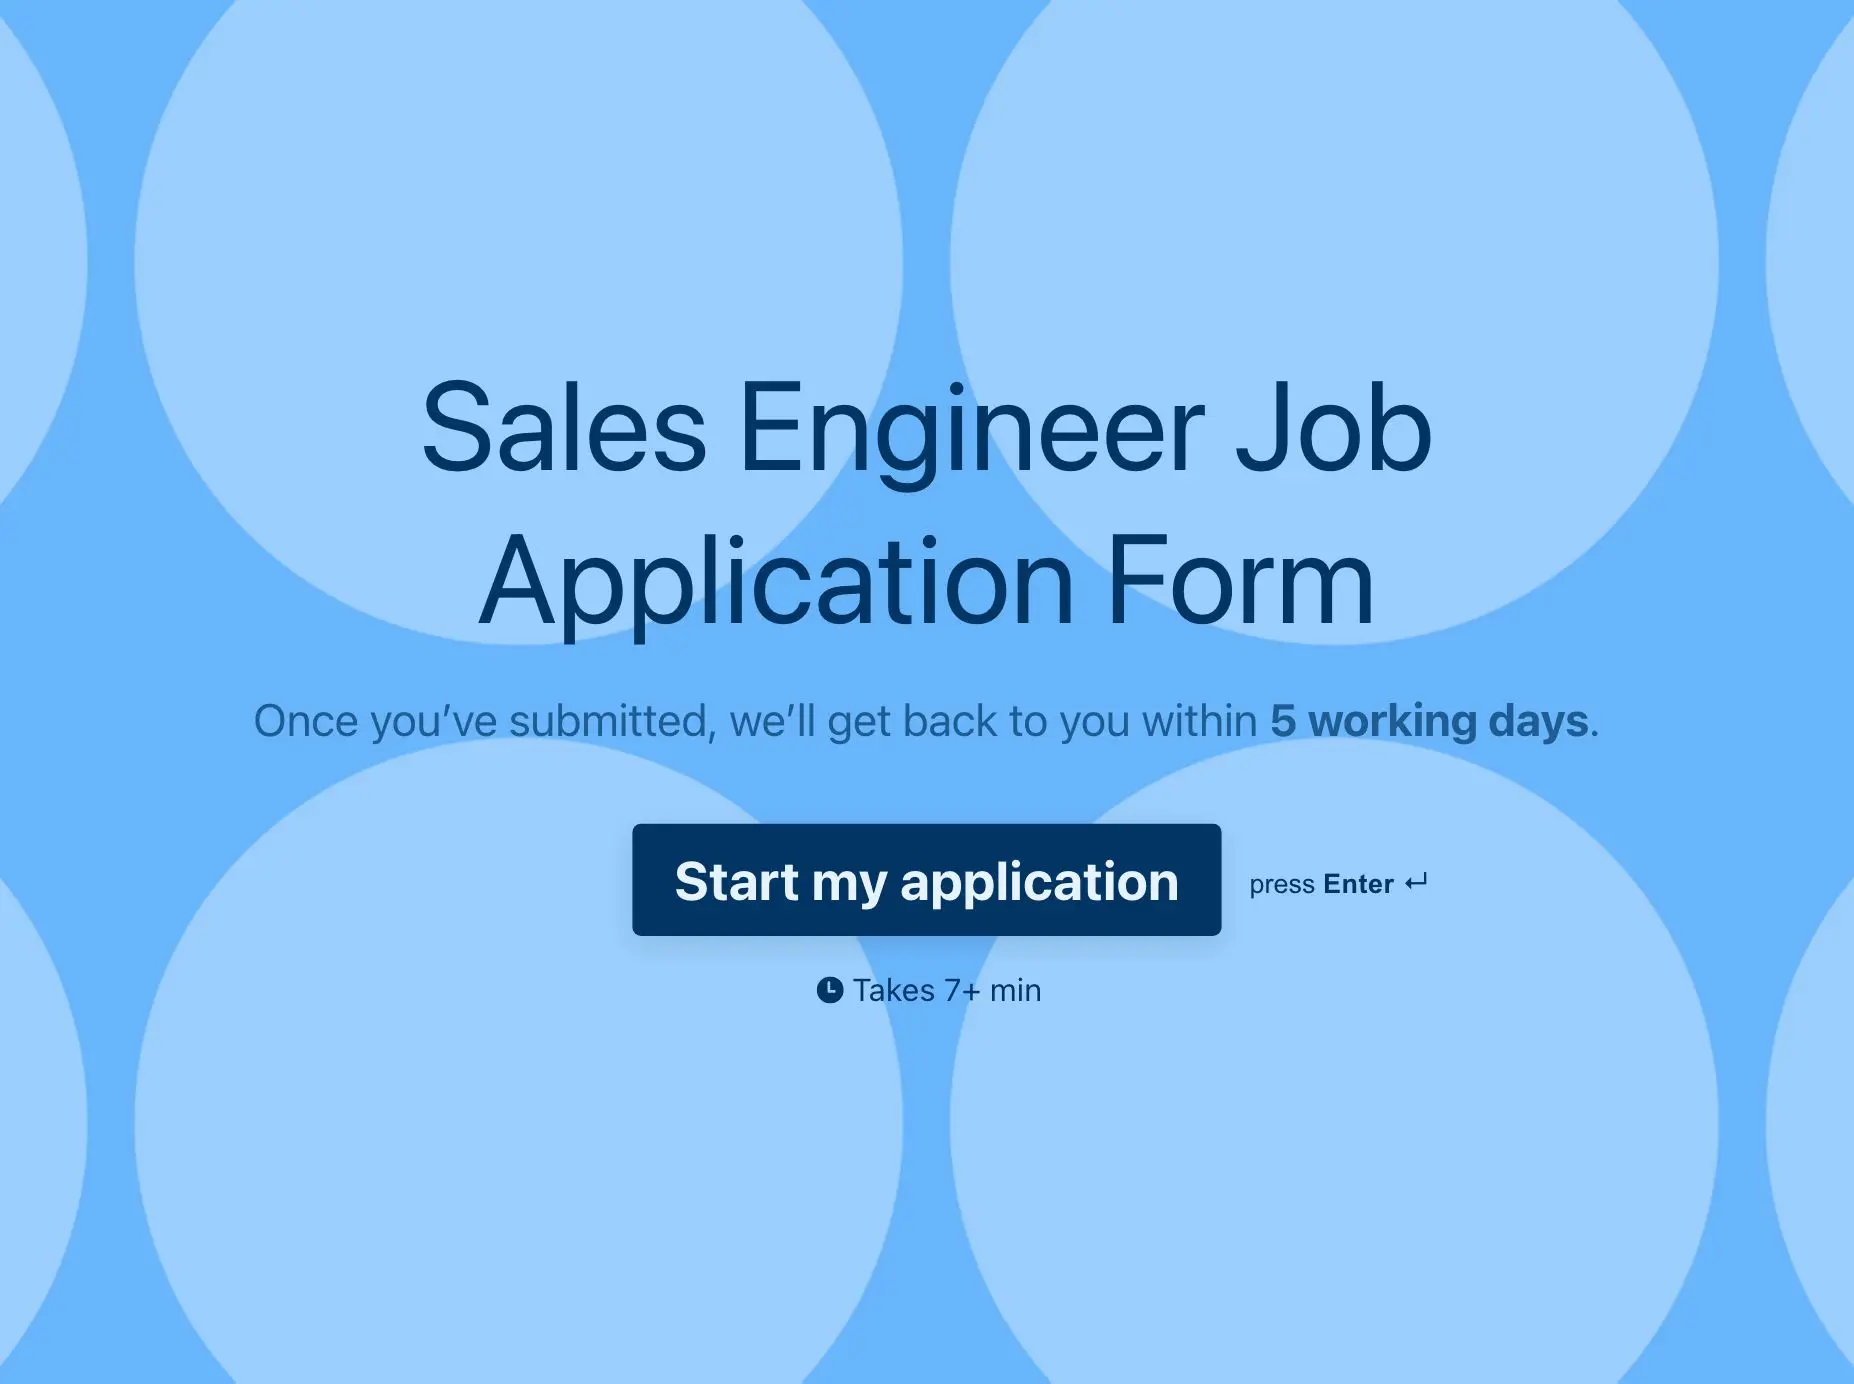 Sales Engineer Job Application Form Template Hero